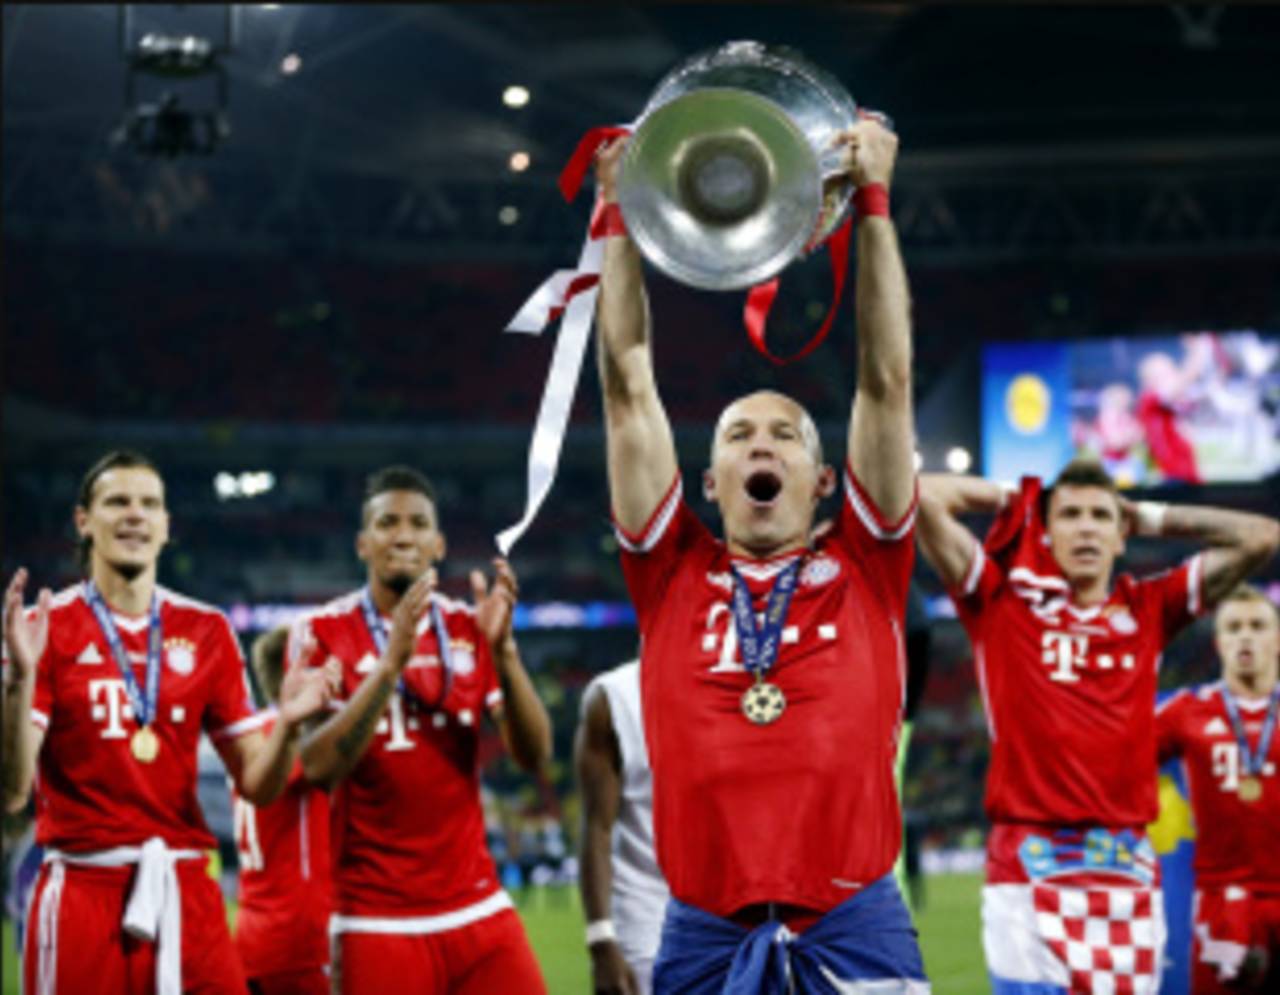 Arjen Robben lifts the trophy after Bayern's victory, Bayern Munich v Borussia Dortmund, Champions League final, Wembley, May 25, 2012